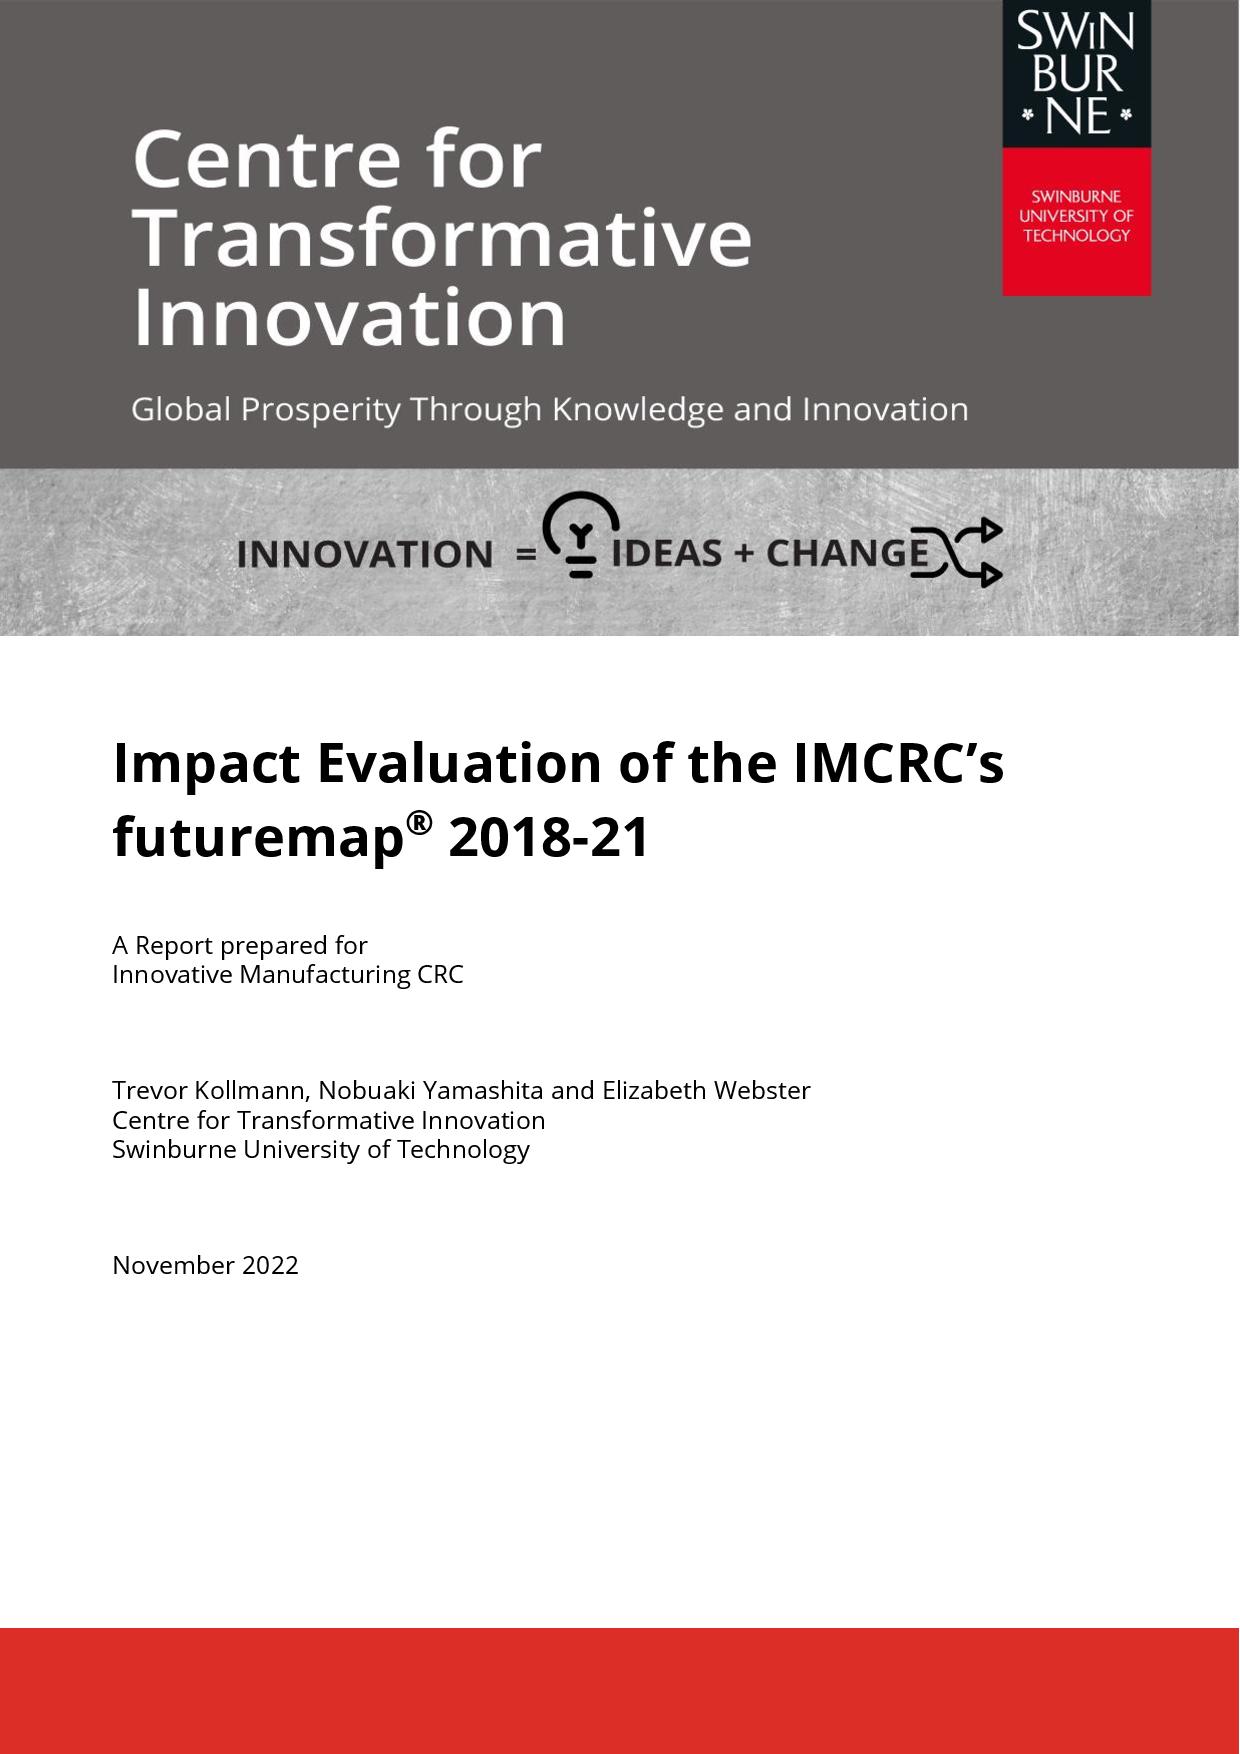 影响评估的IMCRC futuremap®2018 - 2021